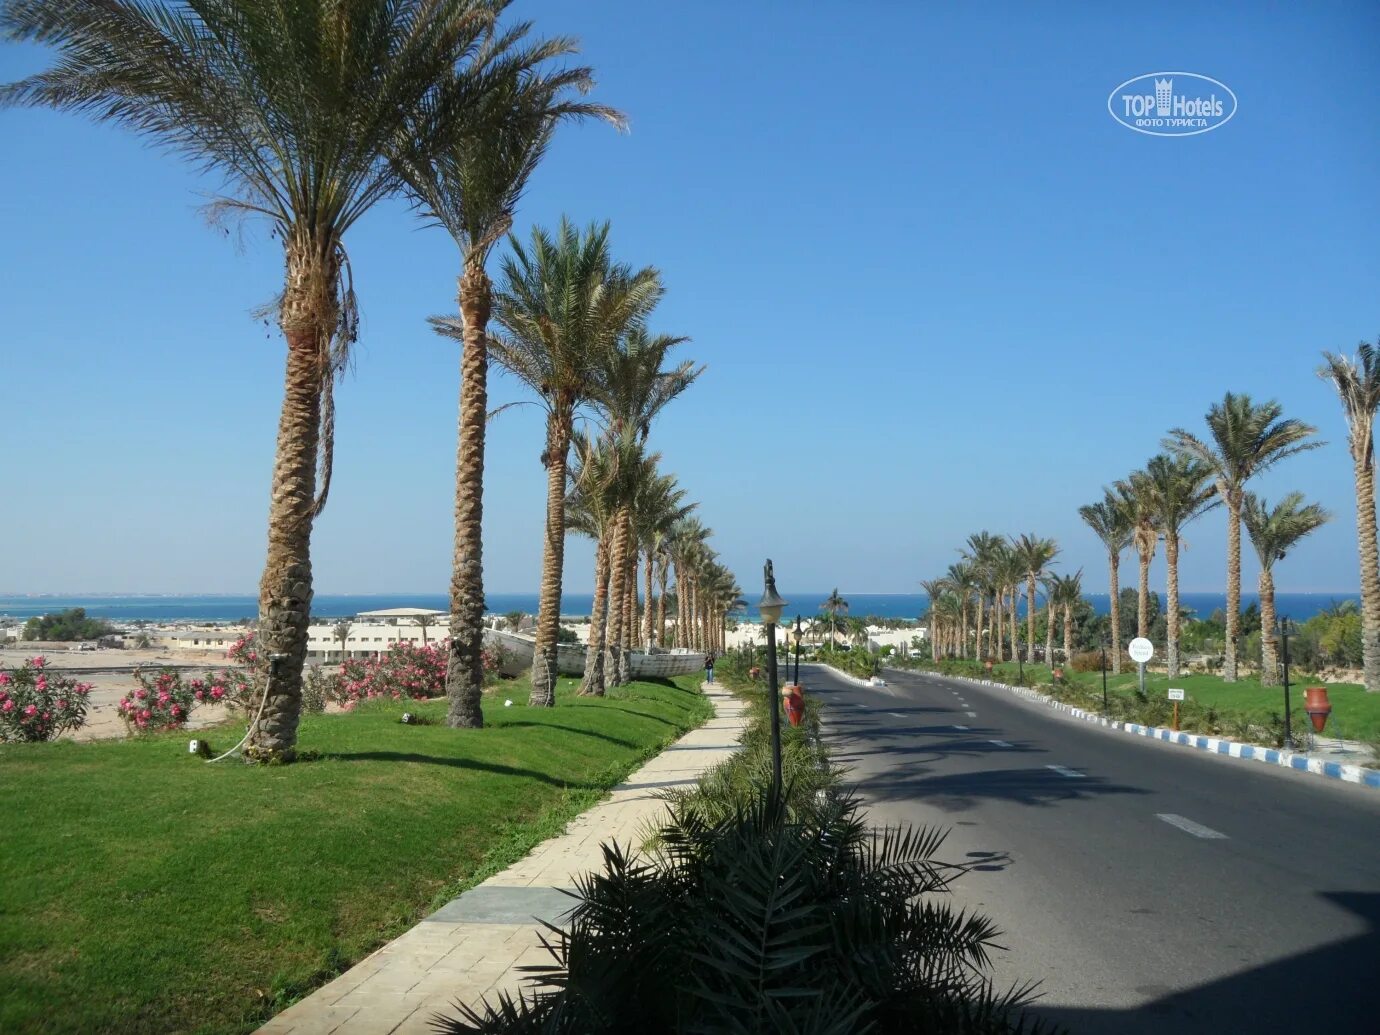 Coral beach hurghada 4. Grand Azur Horizon Хургада. Отель Гранд Азур в Хургаде. Отель Гранд Азур Горизонт в Хургаде. Coral Beach Hotel Hurghada 4.